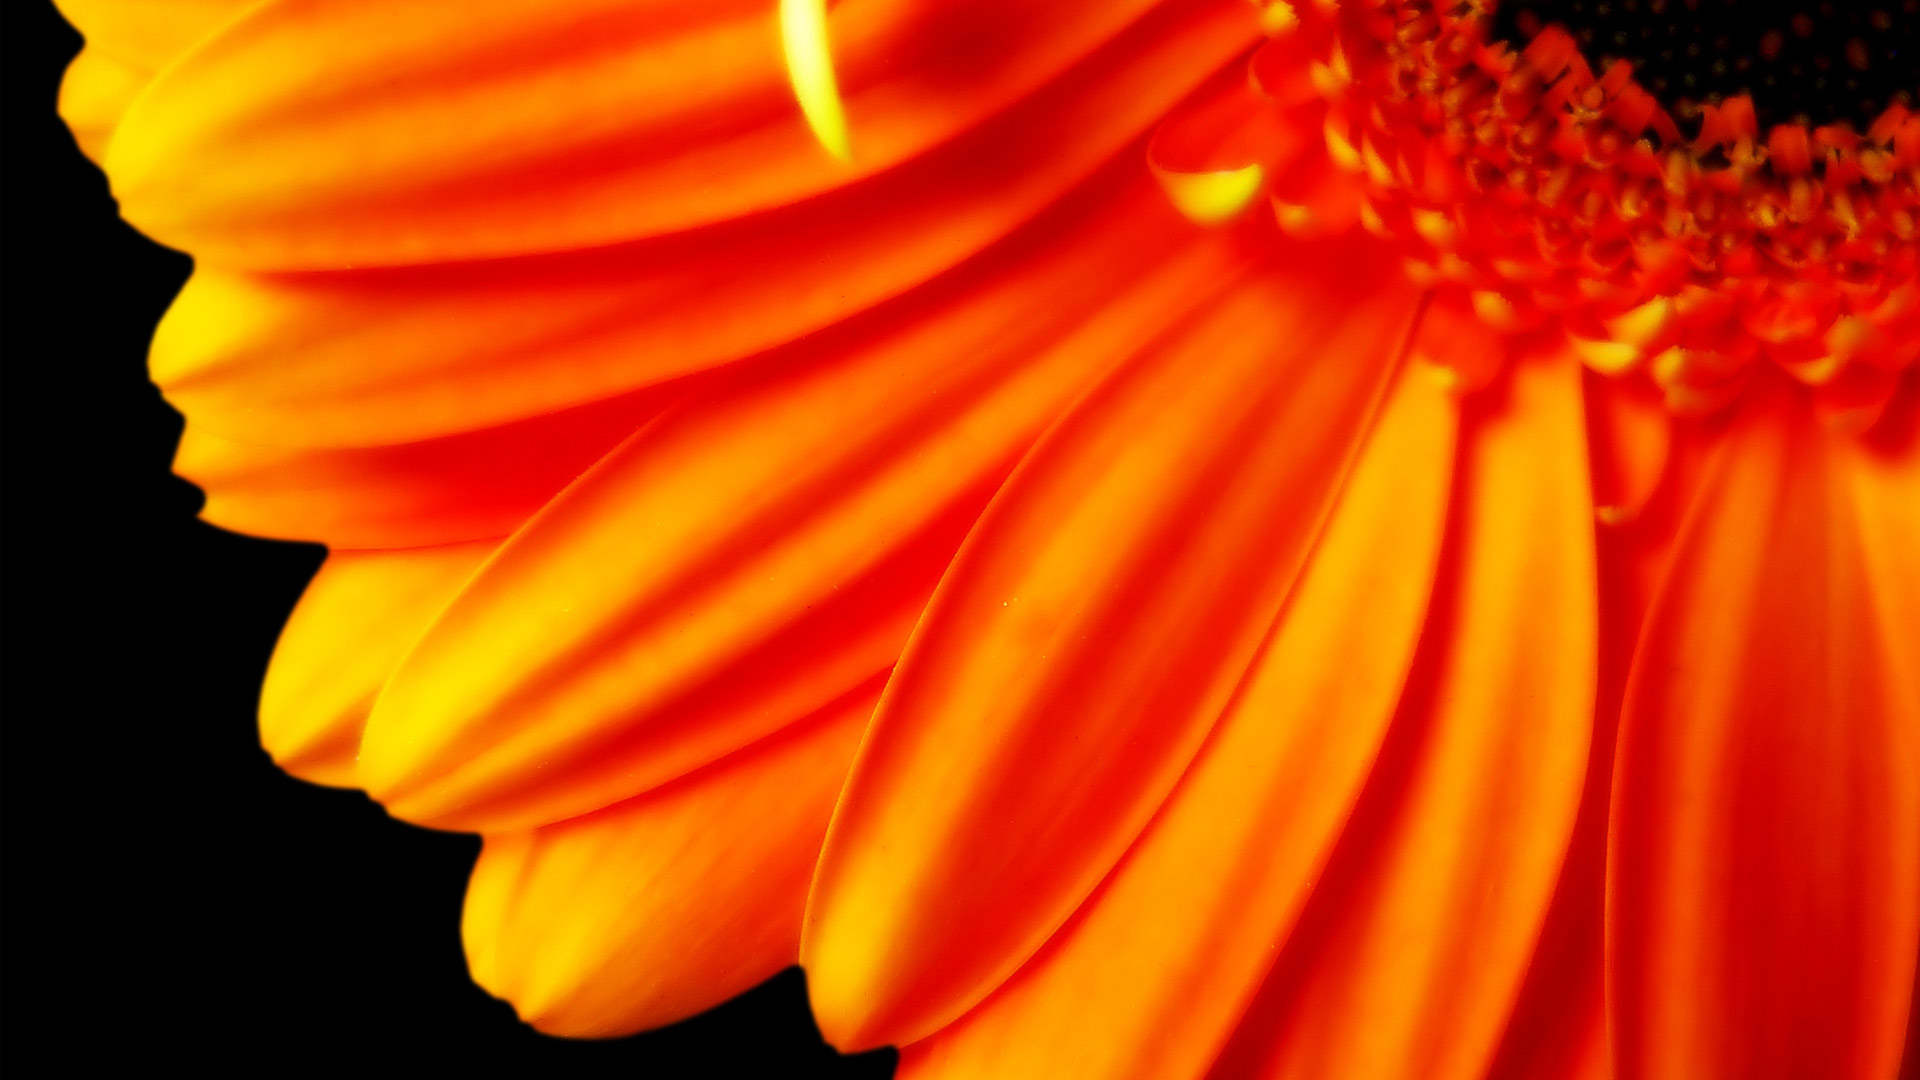 Pure Orange Flower 1080p Wallpapers | HD Wallpapers | ID #5625